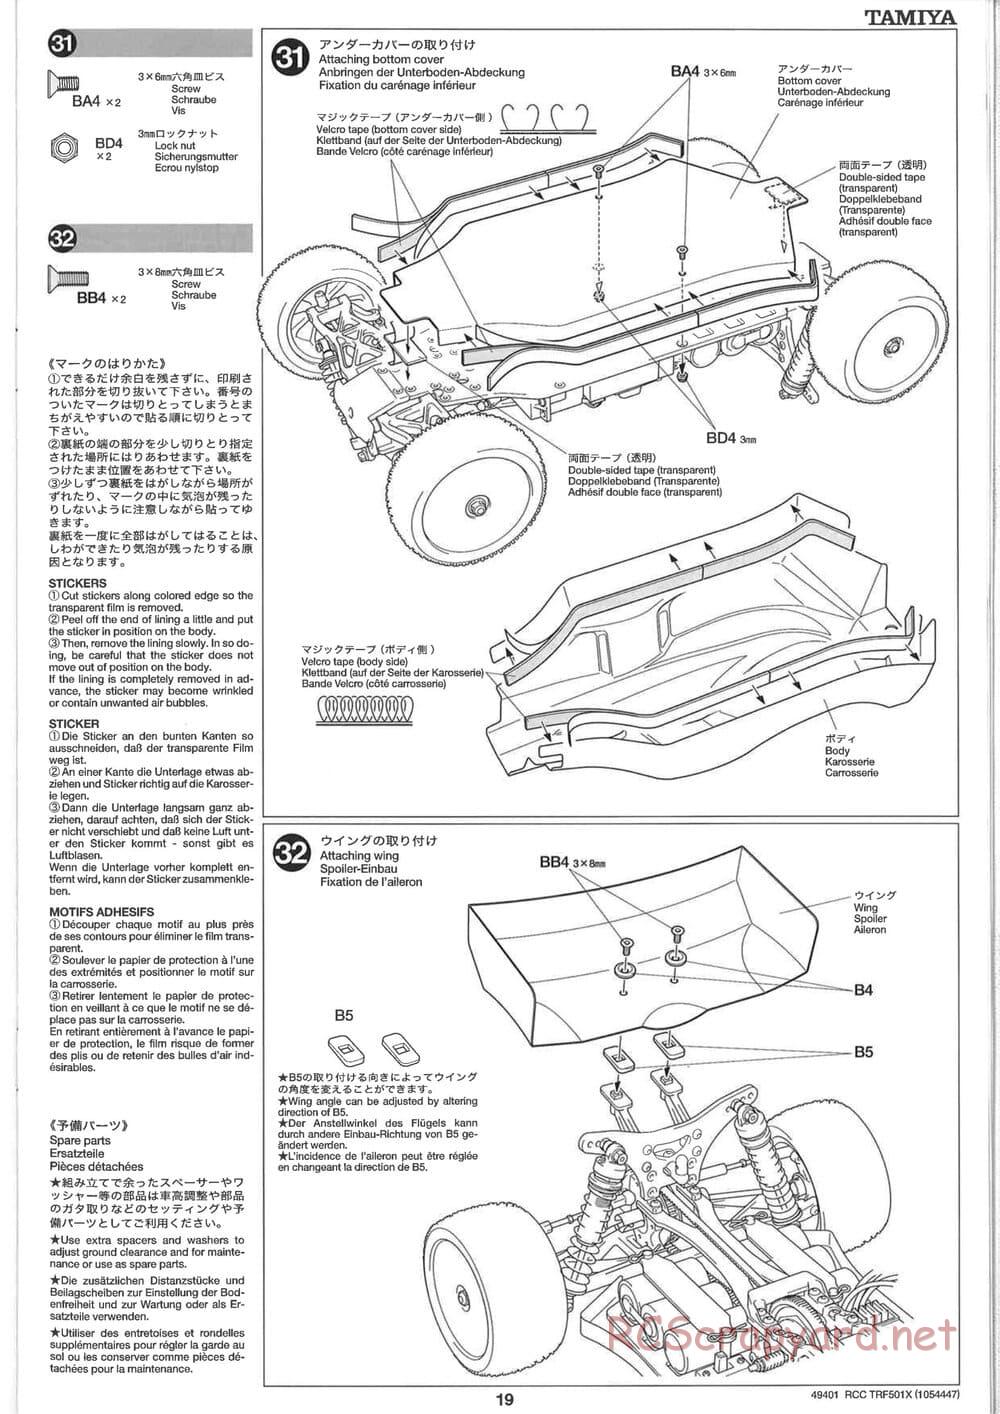 Tamiya - TRF501X Chassis - Manual - Page 19